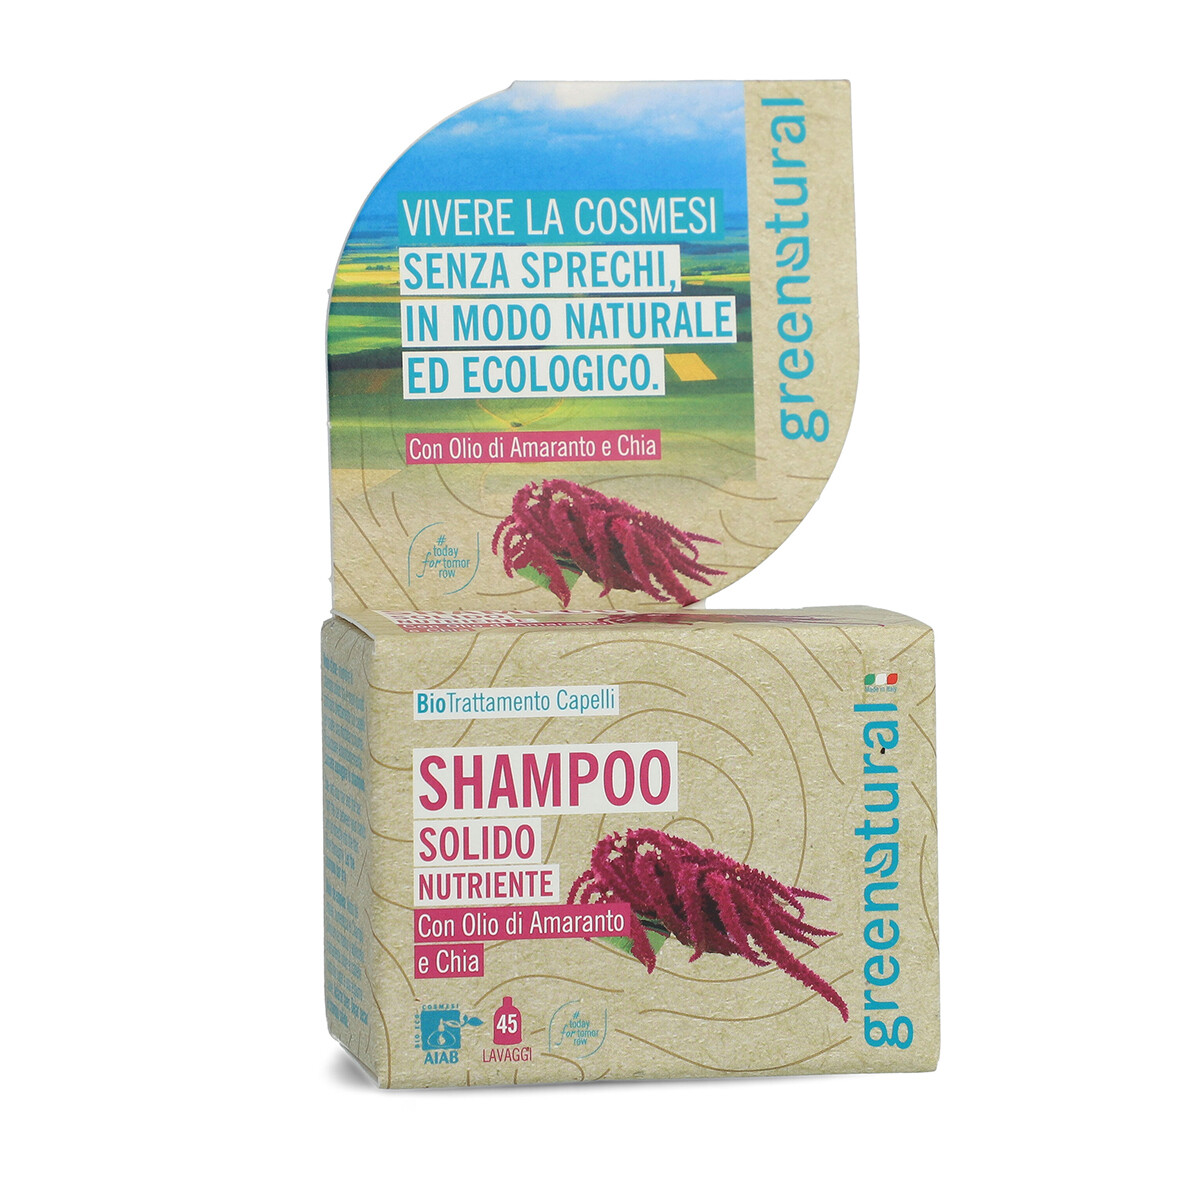 Shampoo Solido Nutriente - GreeNatural